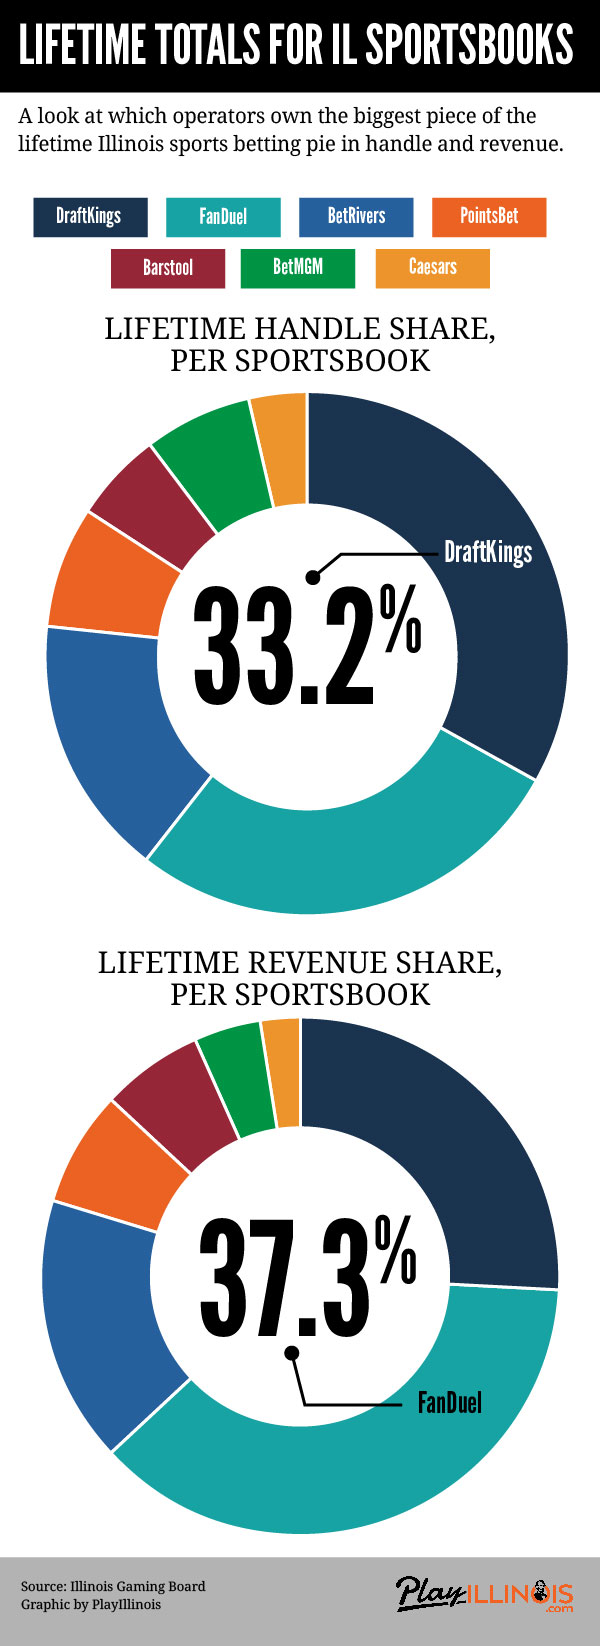 Illinois sportsbook lifetime market share through February 2023